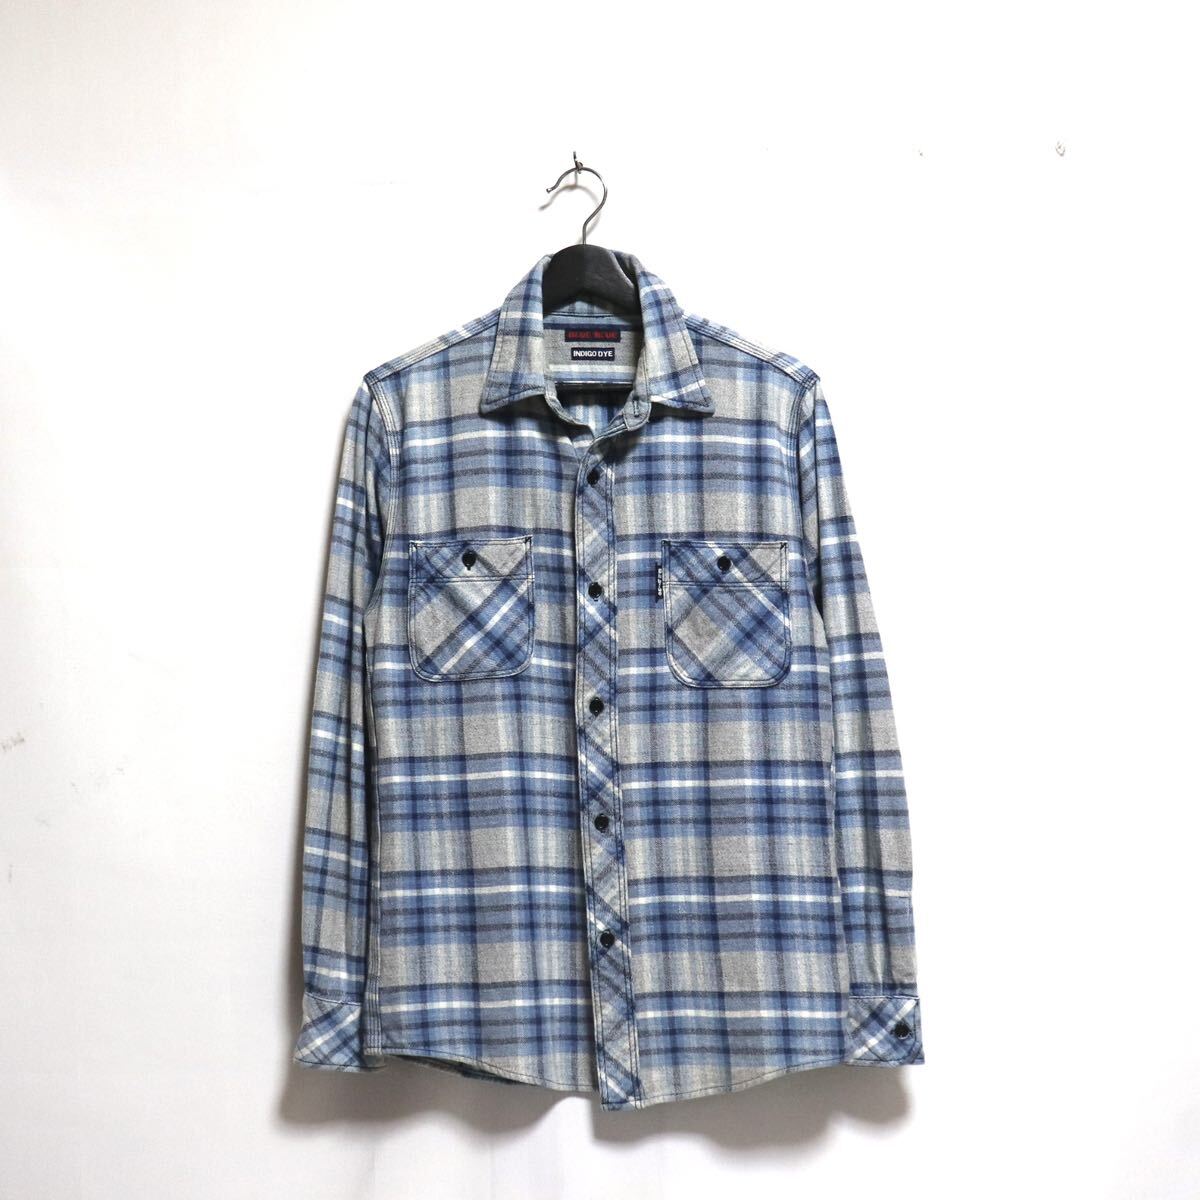  Trend [BLUE BLUE JAPANb lube Roo ]INDIGO DYE/ flannel shirt check shirt / shirt long sleeve shirt 